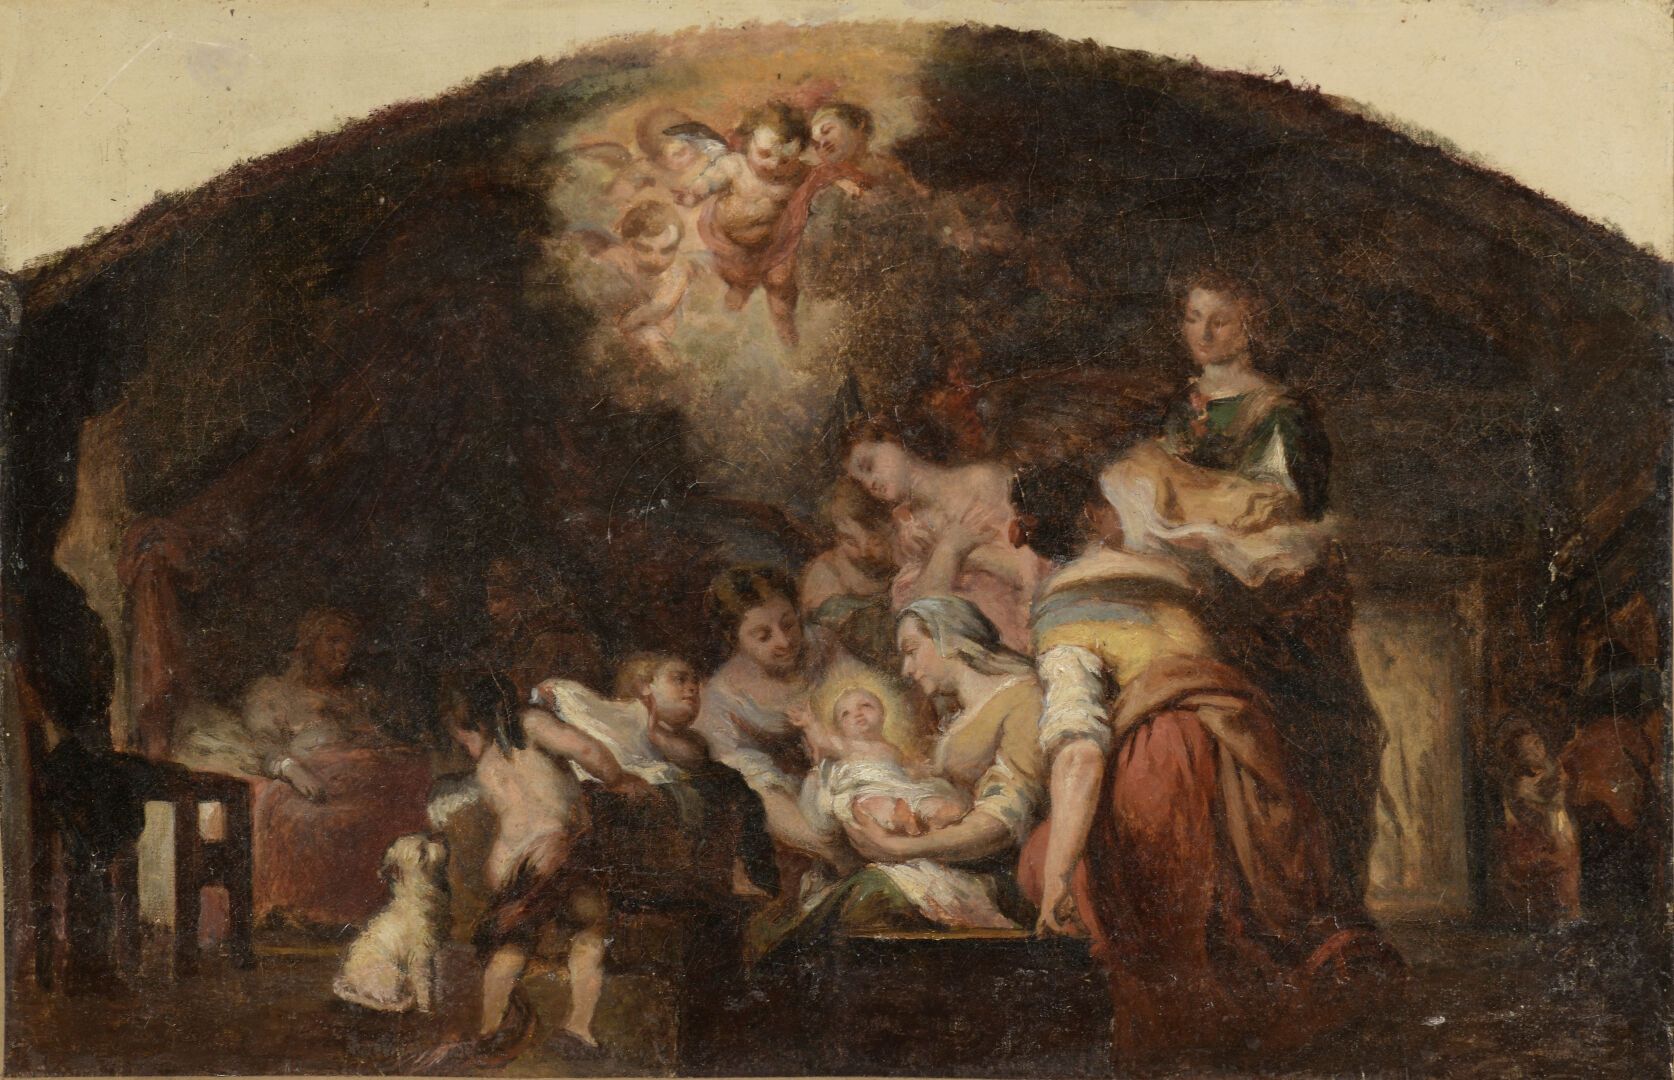 École FRANÇAISE du XVIIIe siècle 18th century FRENCH school

Birth of Christ

Oi&hellip;